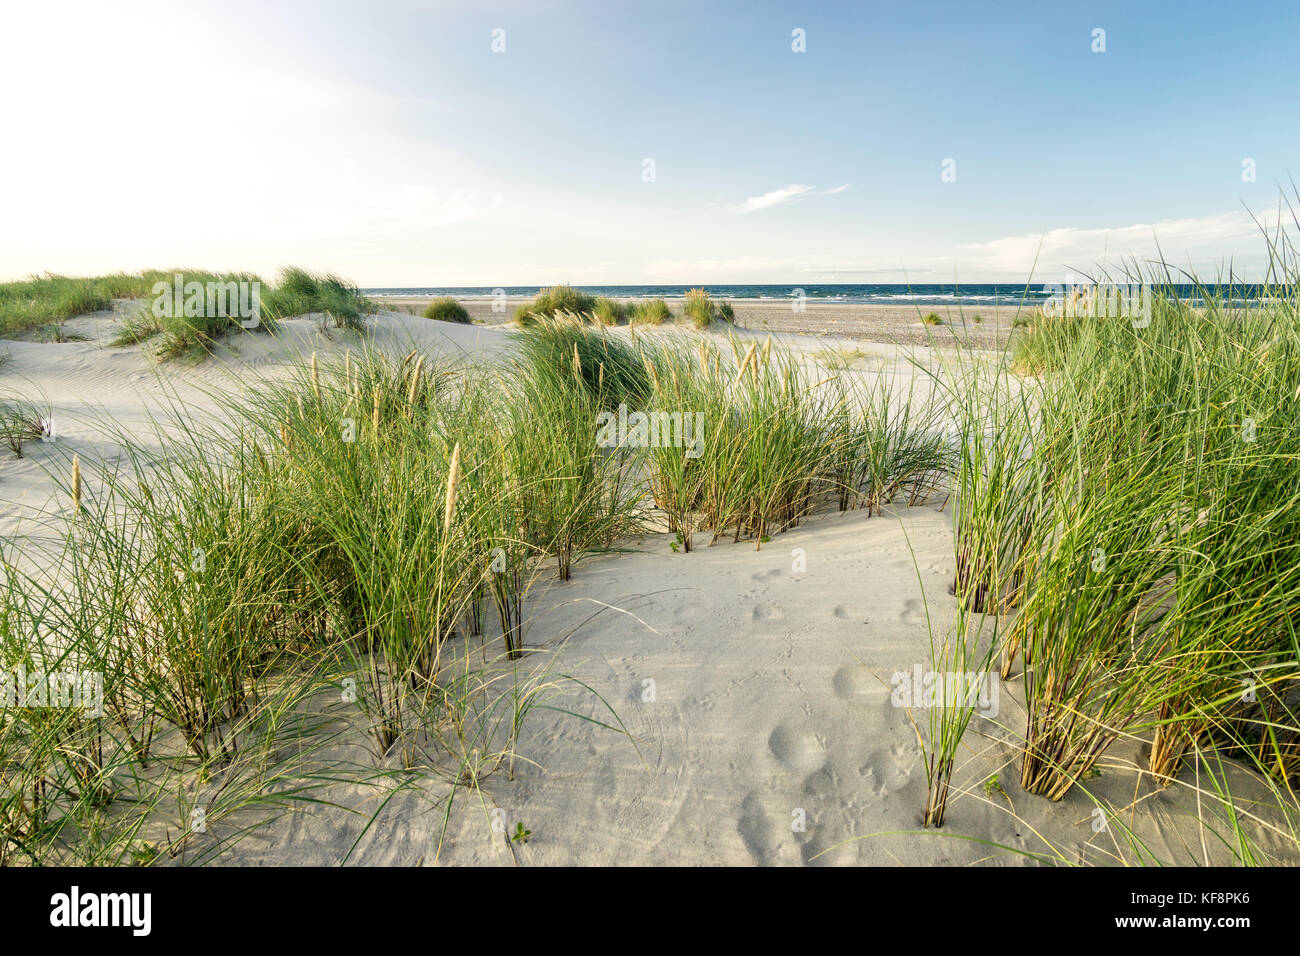 Beach with sand dunes and marram grass in soft evening sunset light. Stock Photo